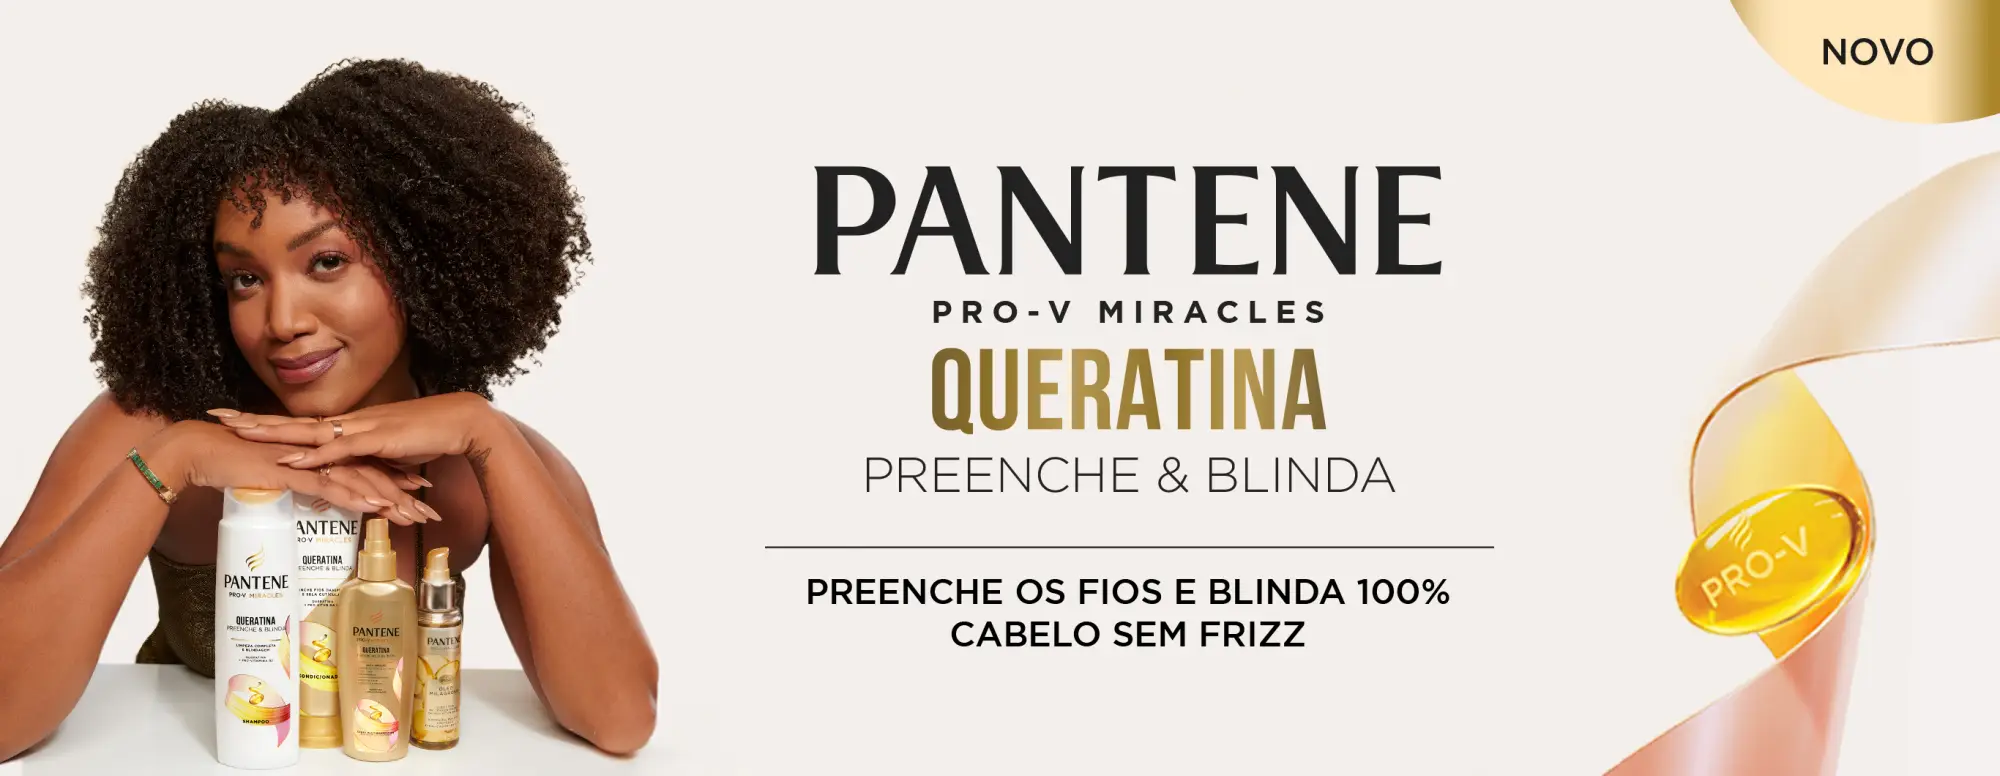 Linha Pantene Pro-V Miracles Queratina preenche   protege, preenche os fios e blinda 100%, cabelo sem frizz